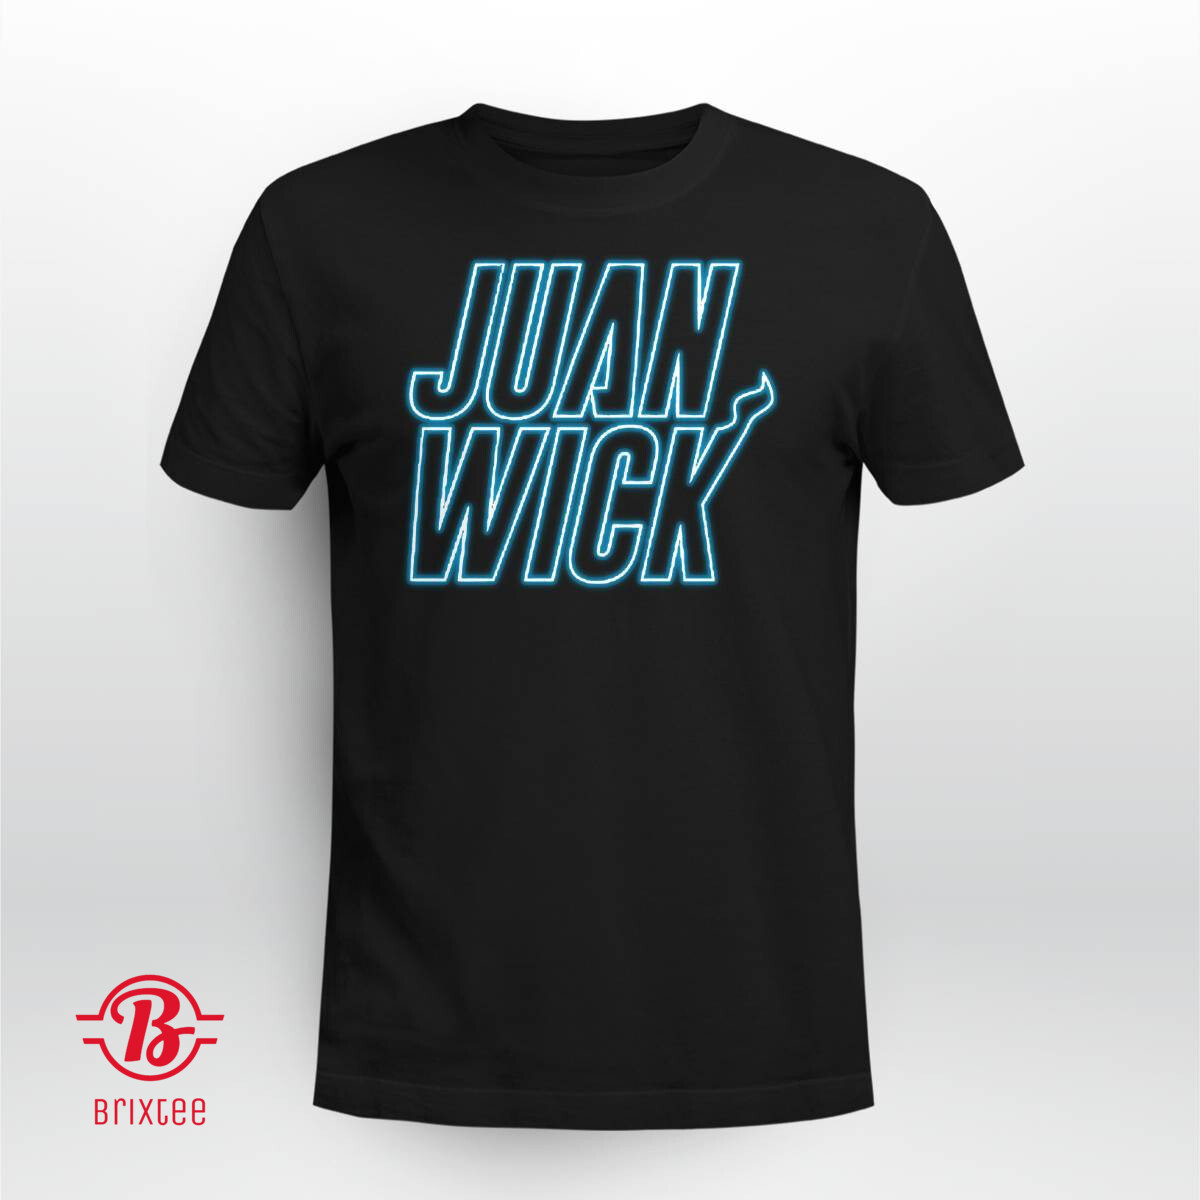 Jaime Jaquez Jr. Juan Wick - Miami Heat